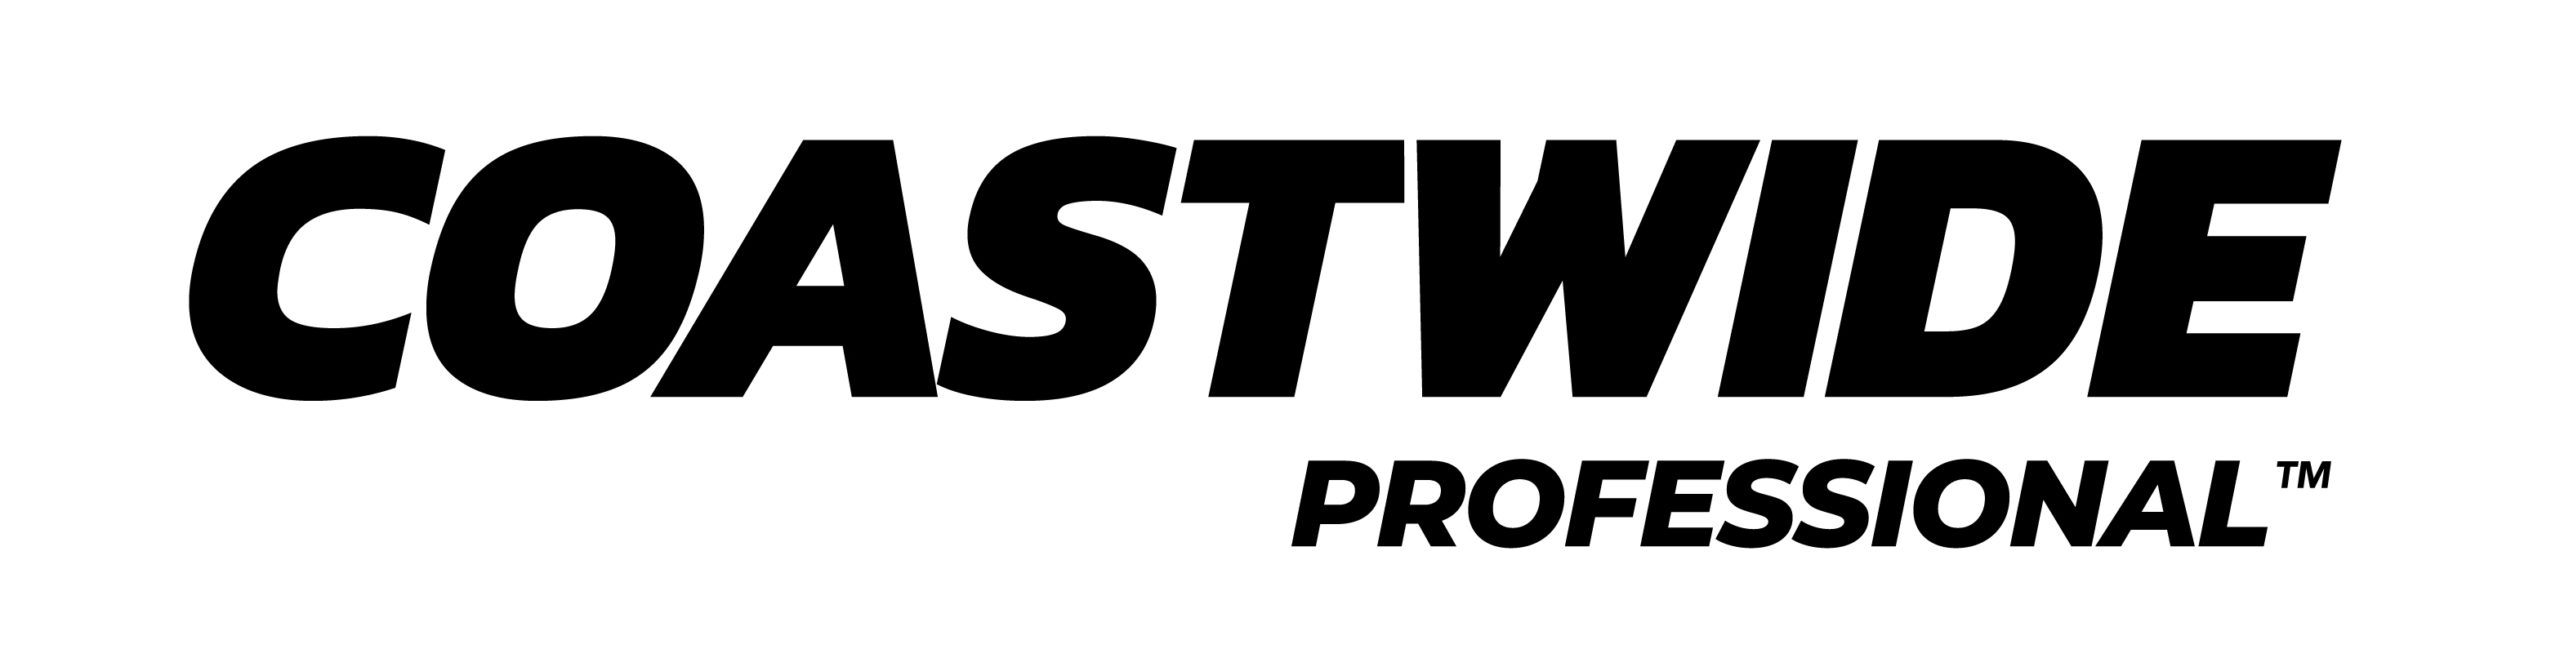 Coastwide Professional Logo